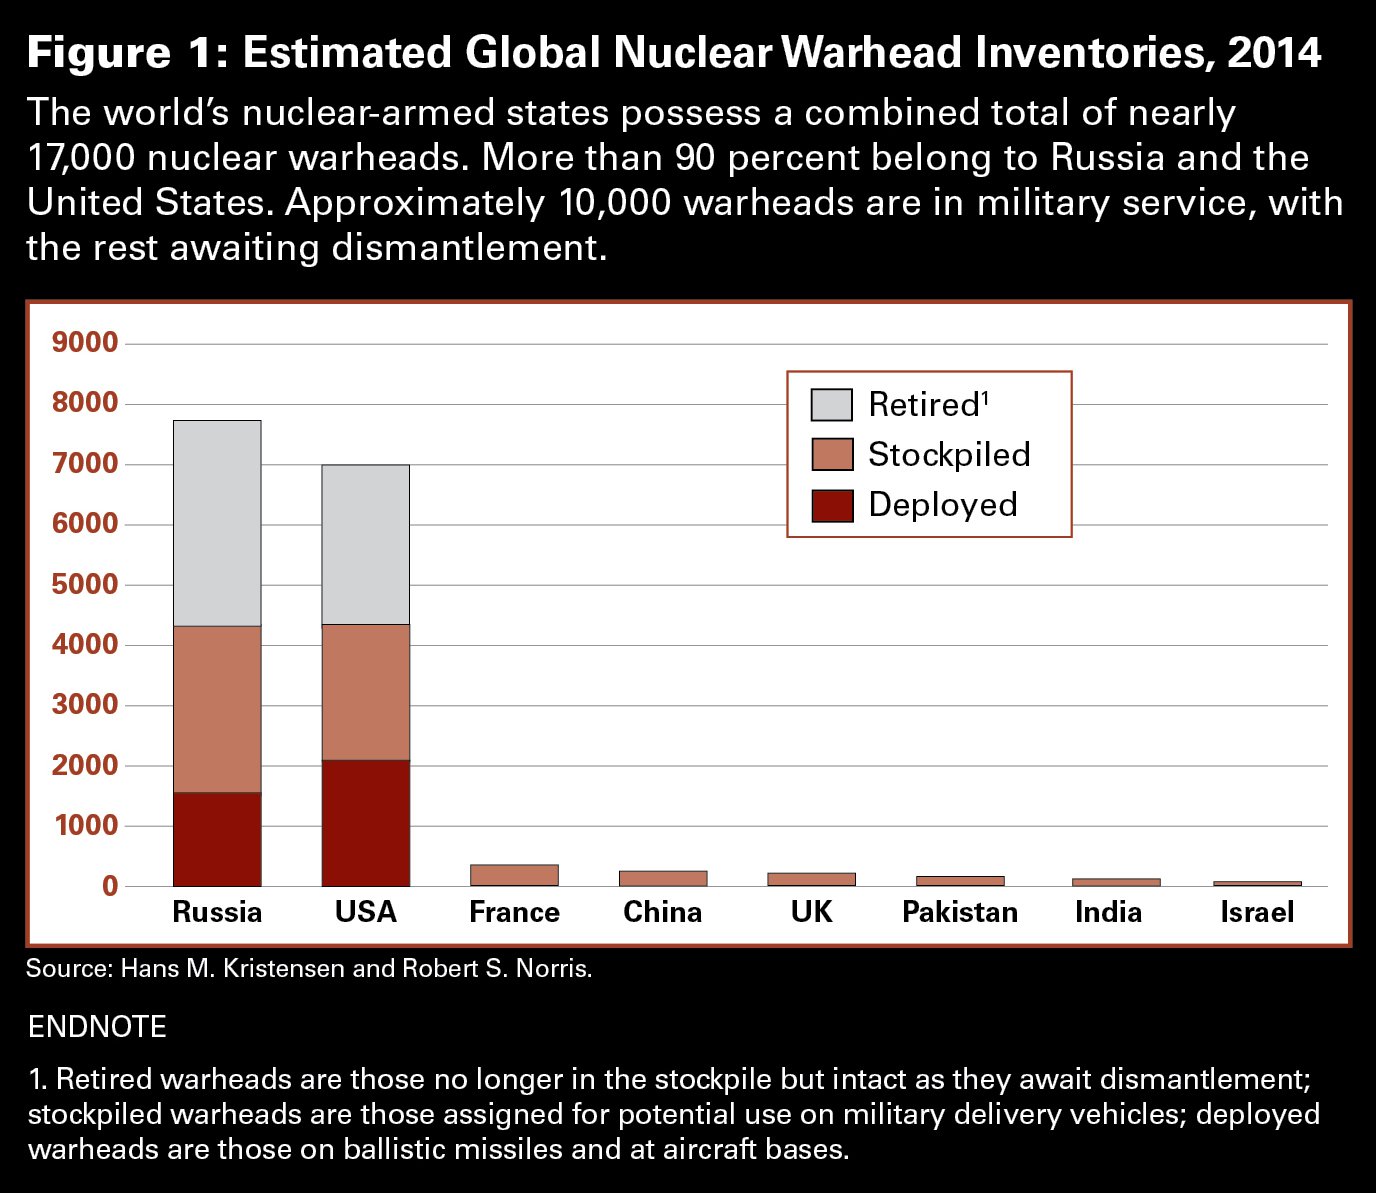 Estimated Global Nuclear Warhead Inventories, 2014. Source: Hans M. Kristensen and Robert S. Norris